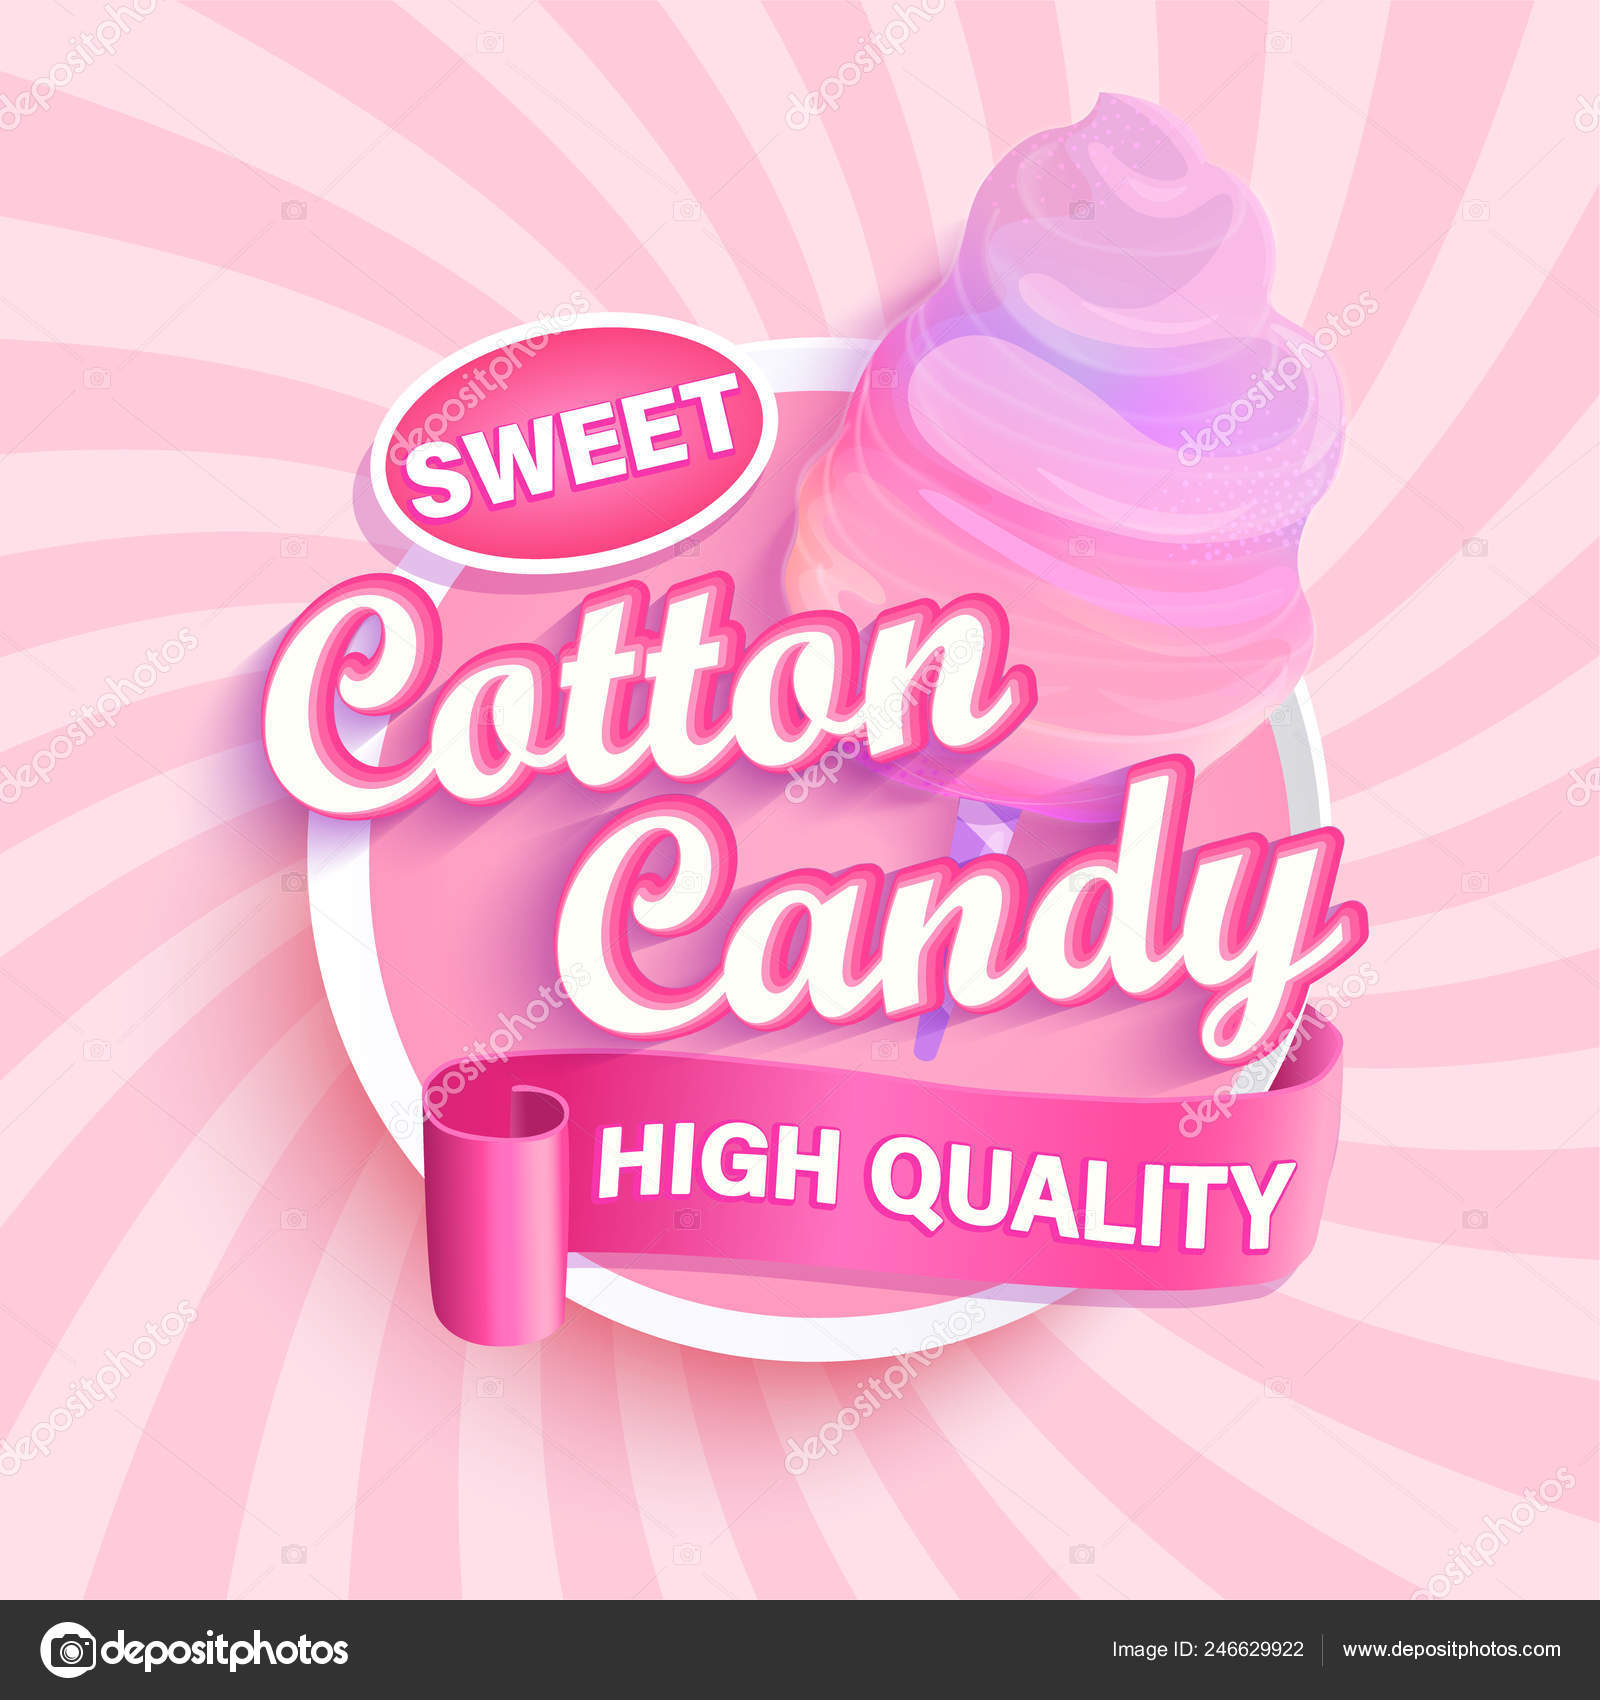 Cotton candy cartoon Vector Art Stock Images | Depositphotos